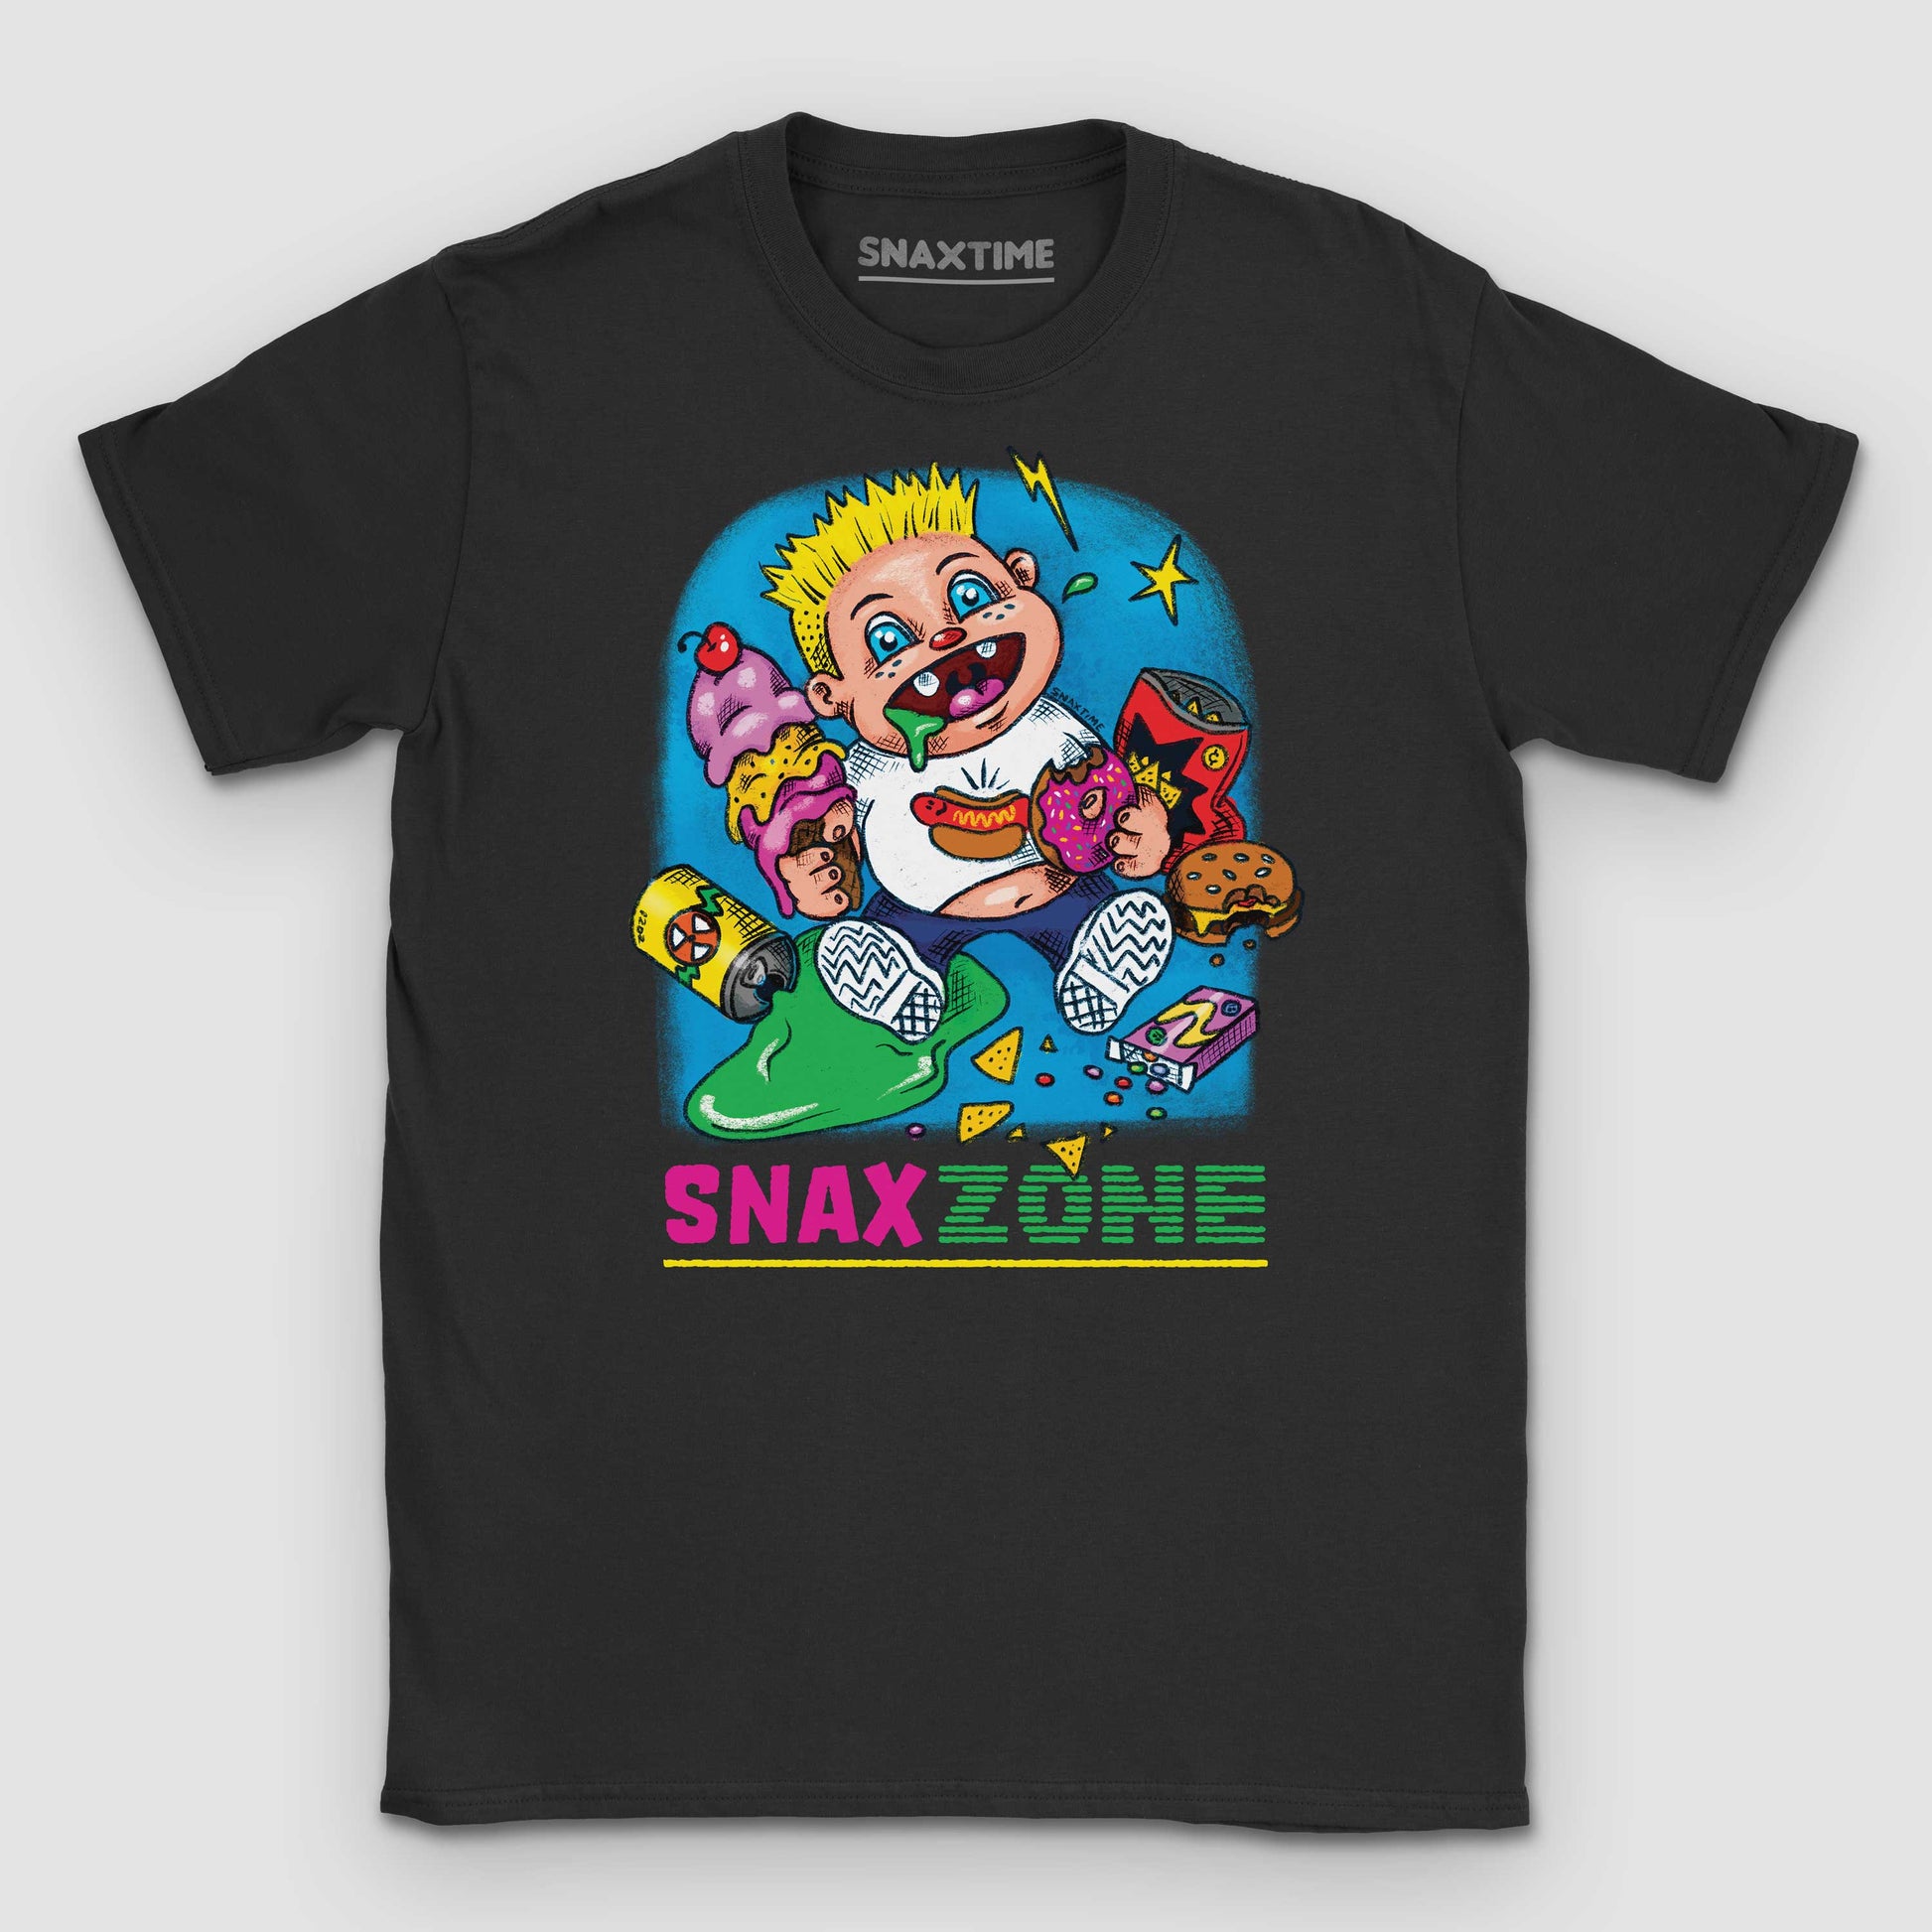 Black Snax Zone Cartoon Junk Food T-Shirt by Snaxtime